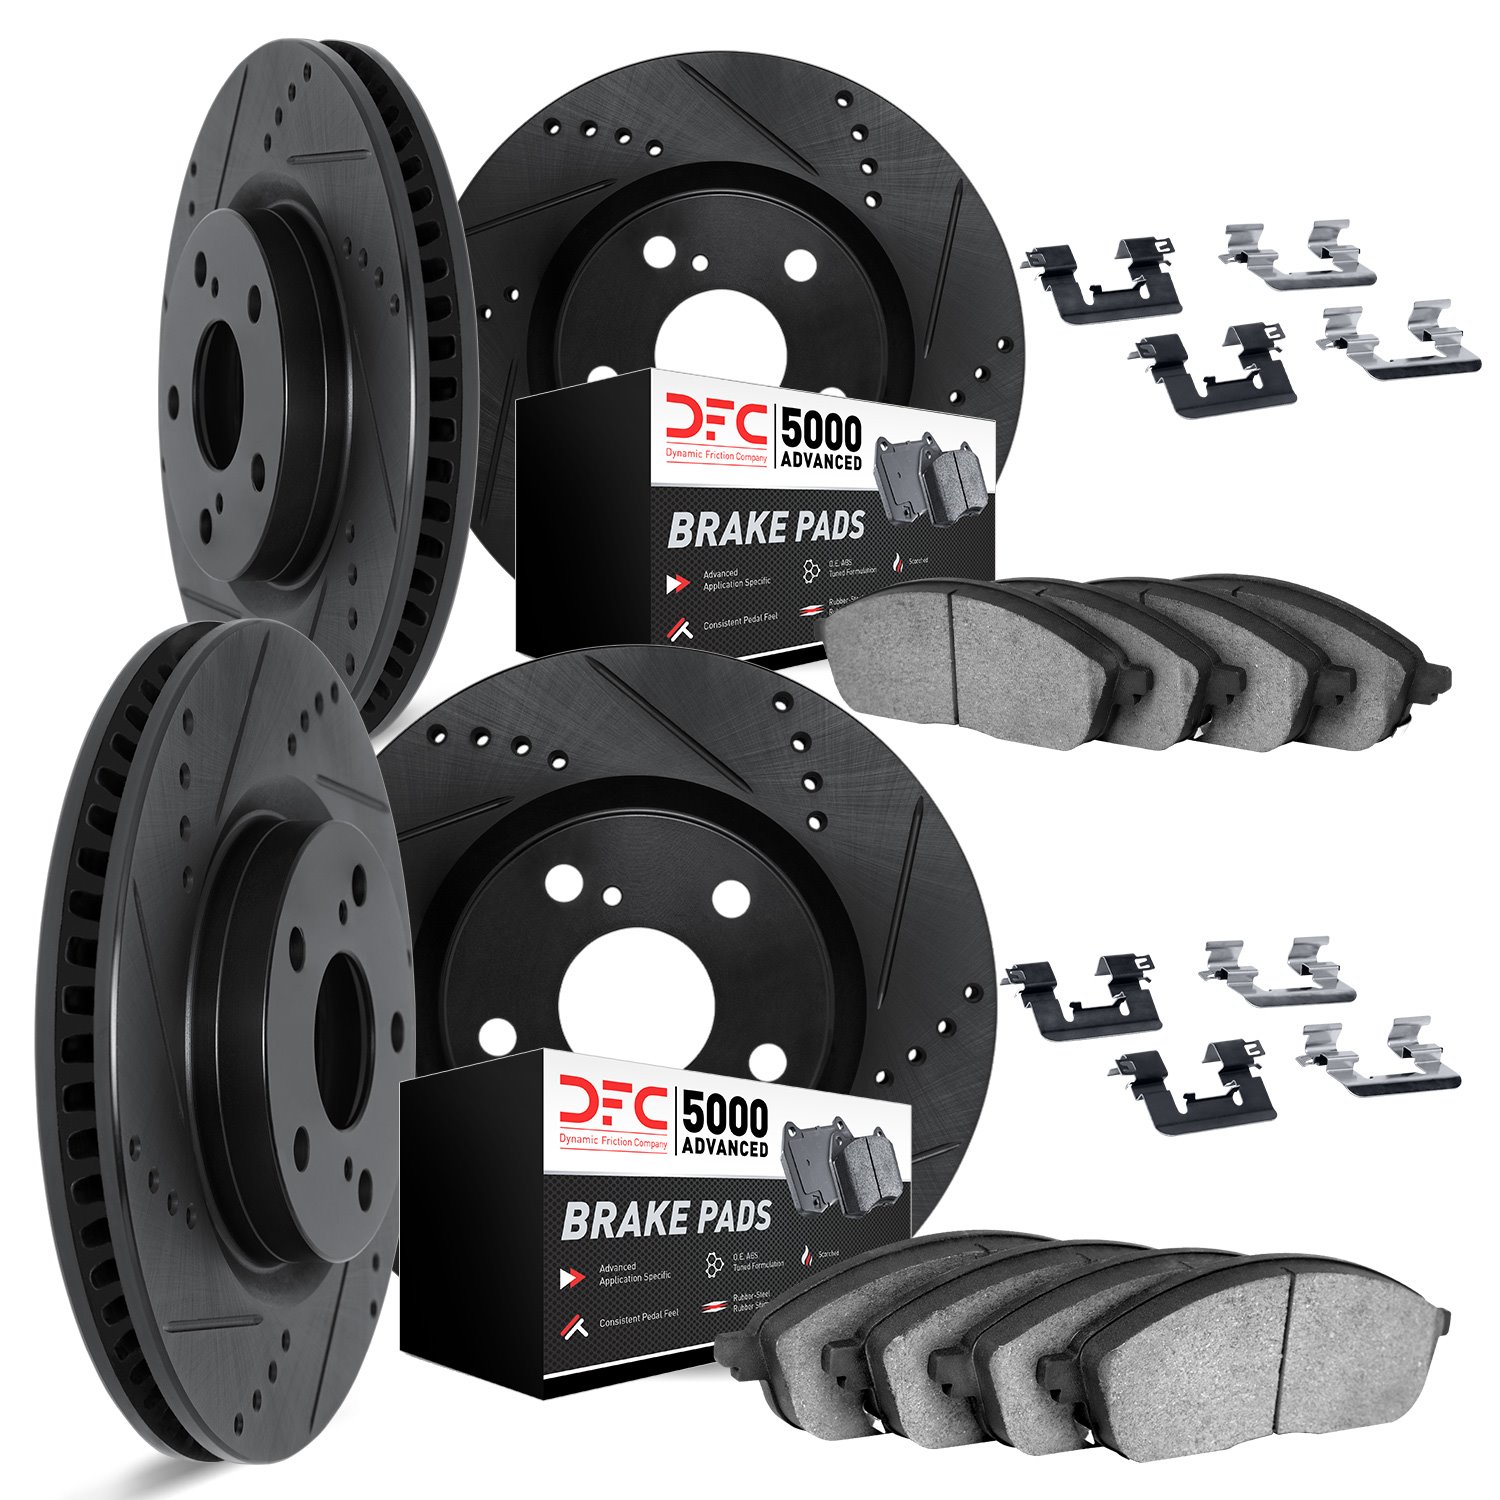 8514-67067 Drilled/Slotted Brake Rotors w/5000 Advanced Brake Pads Kit & Hardware [Black], 2014-2017 Infiniti/Nissan, Position: